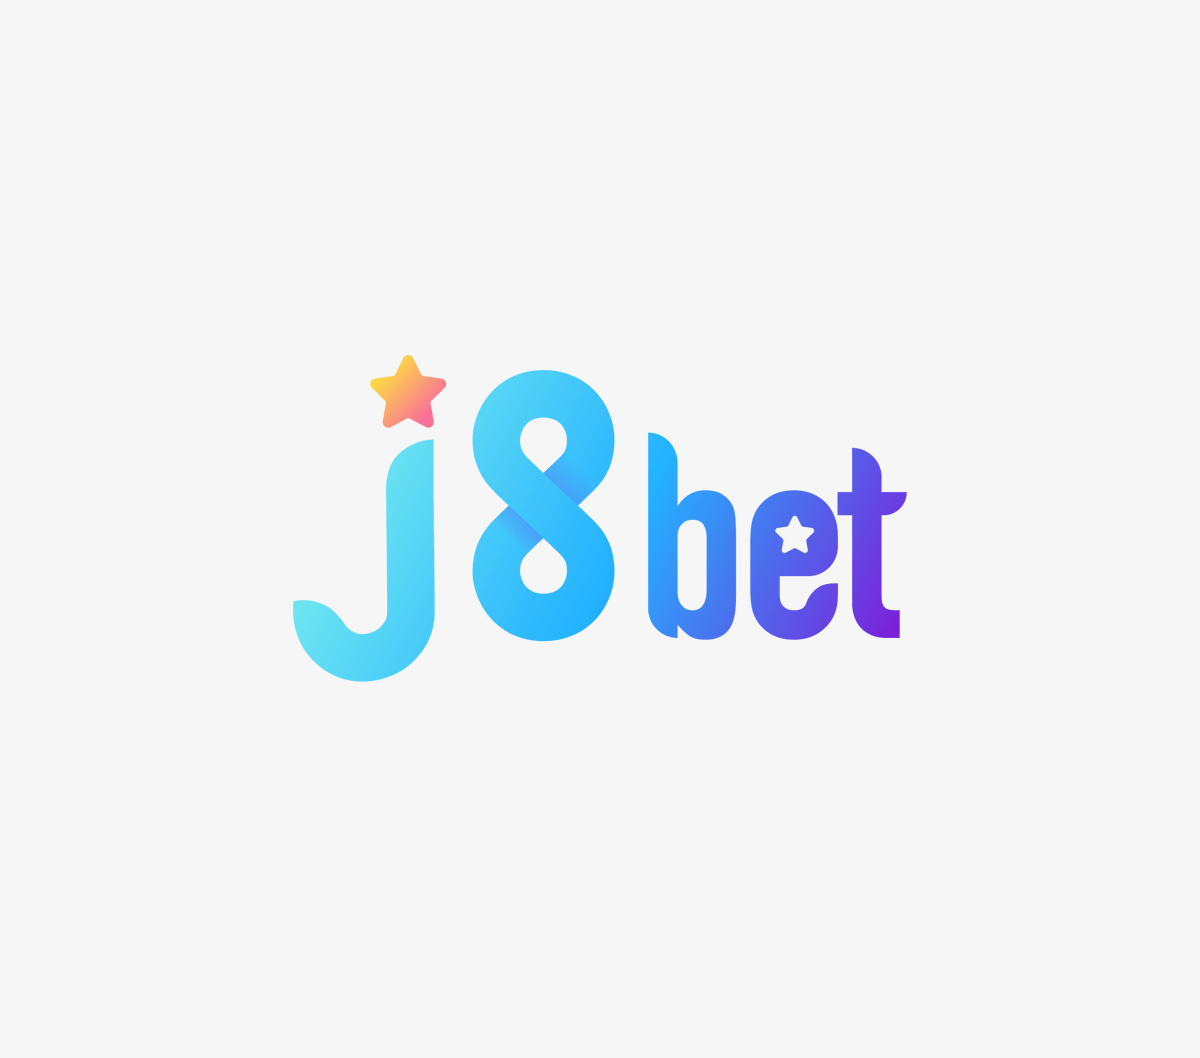 J8 Bet Logo Design